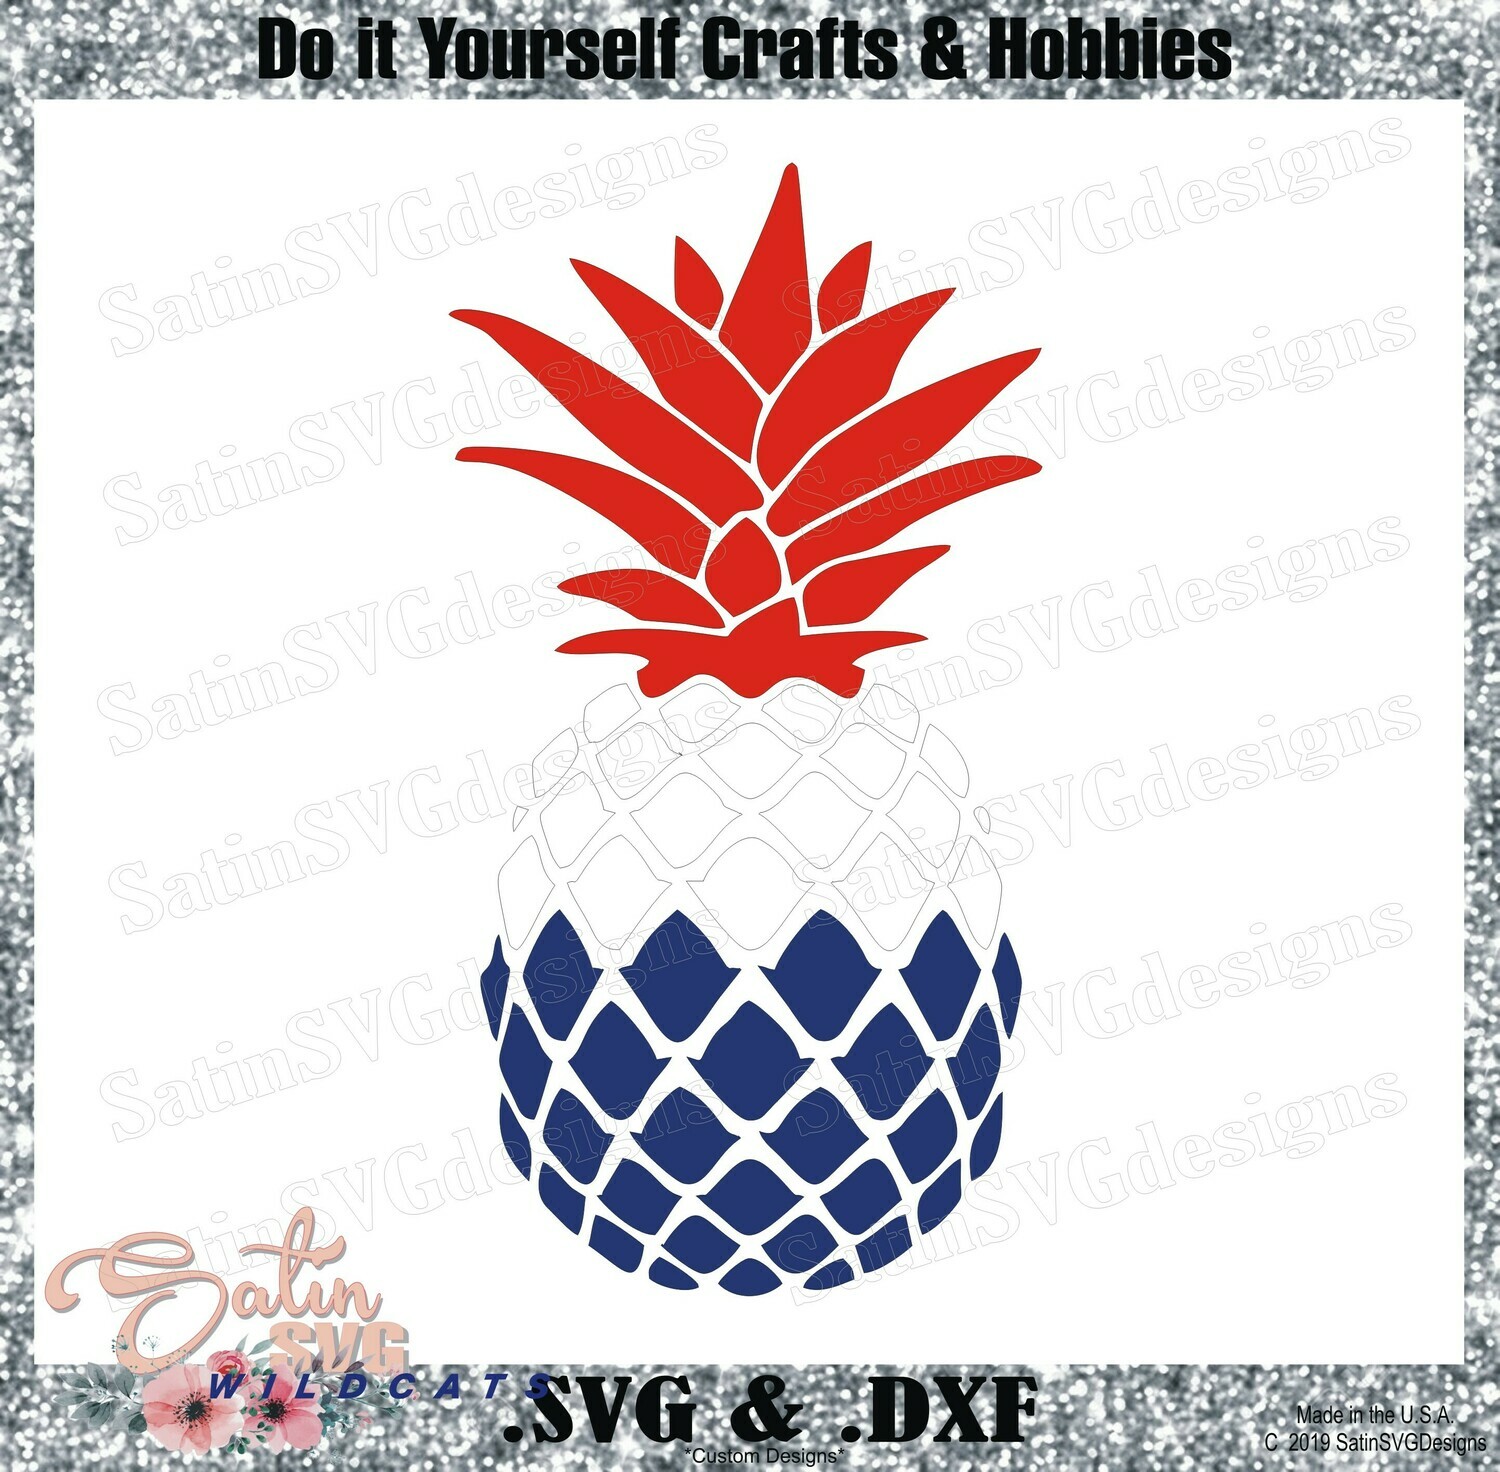 Pineapple Red White and Blue Designs SVG Files, Cricut, Silhouette Studio, Digital Cut Files